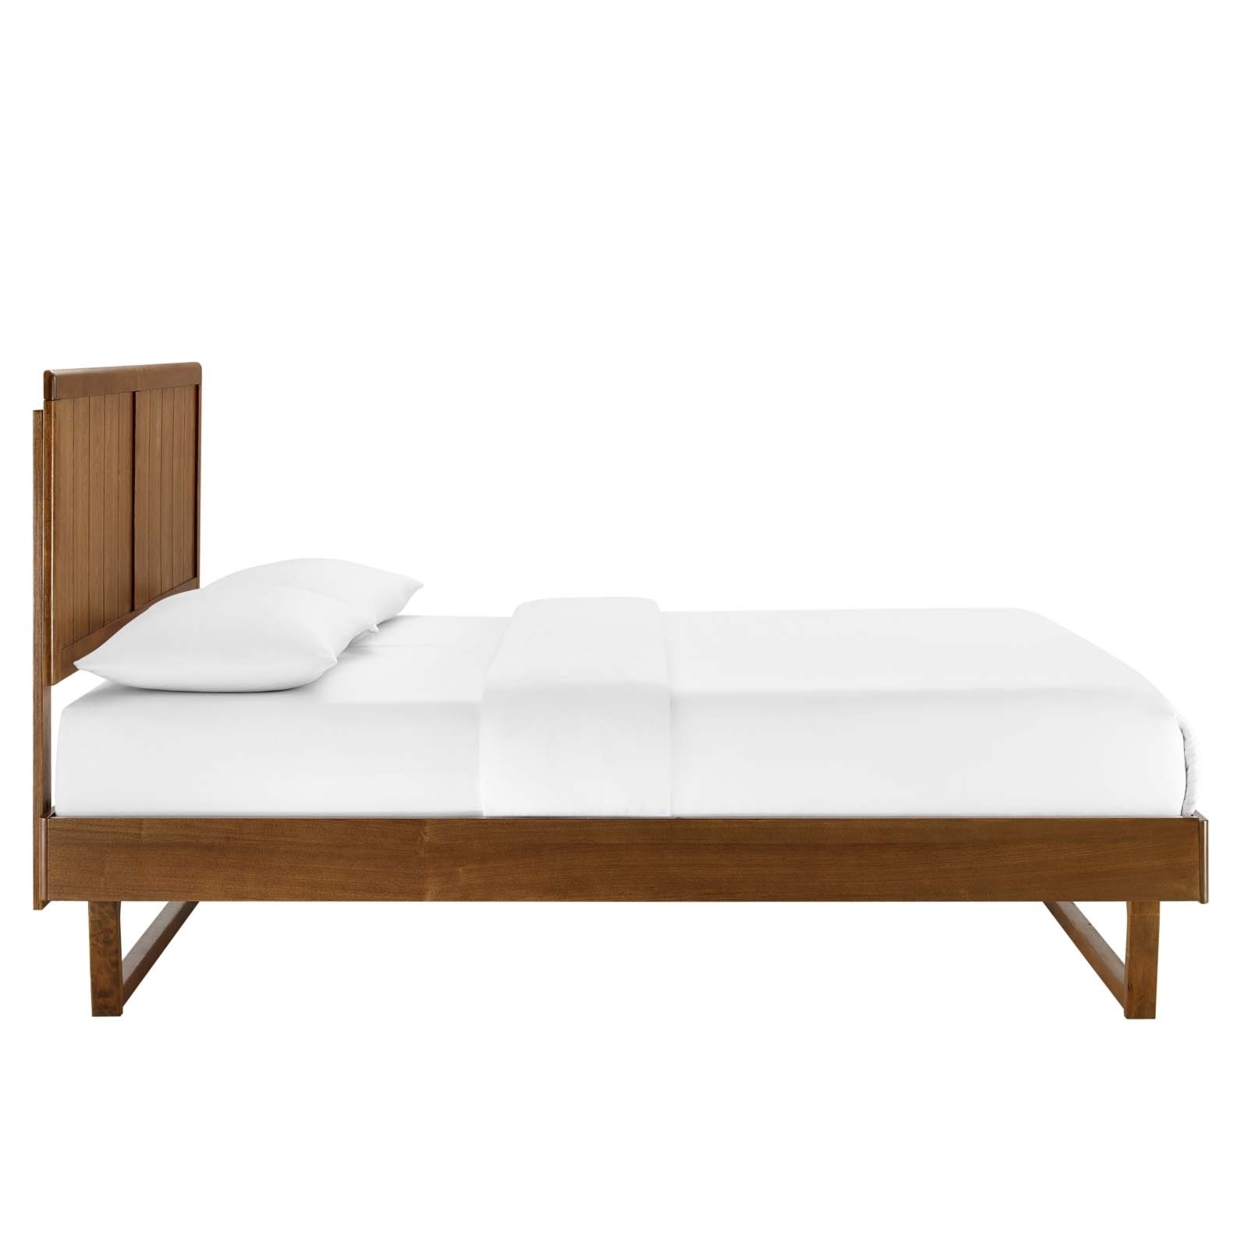 Alana Queen Wood Platform Bed With Angular Frame, Walnut